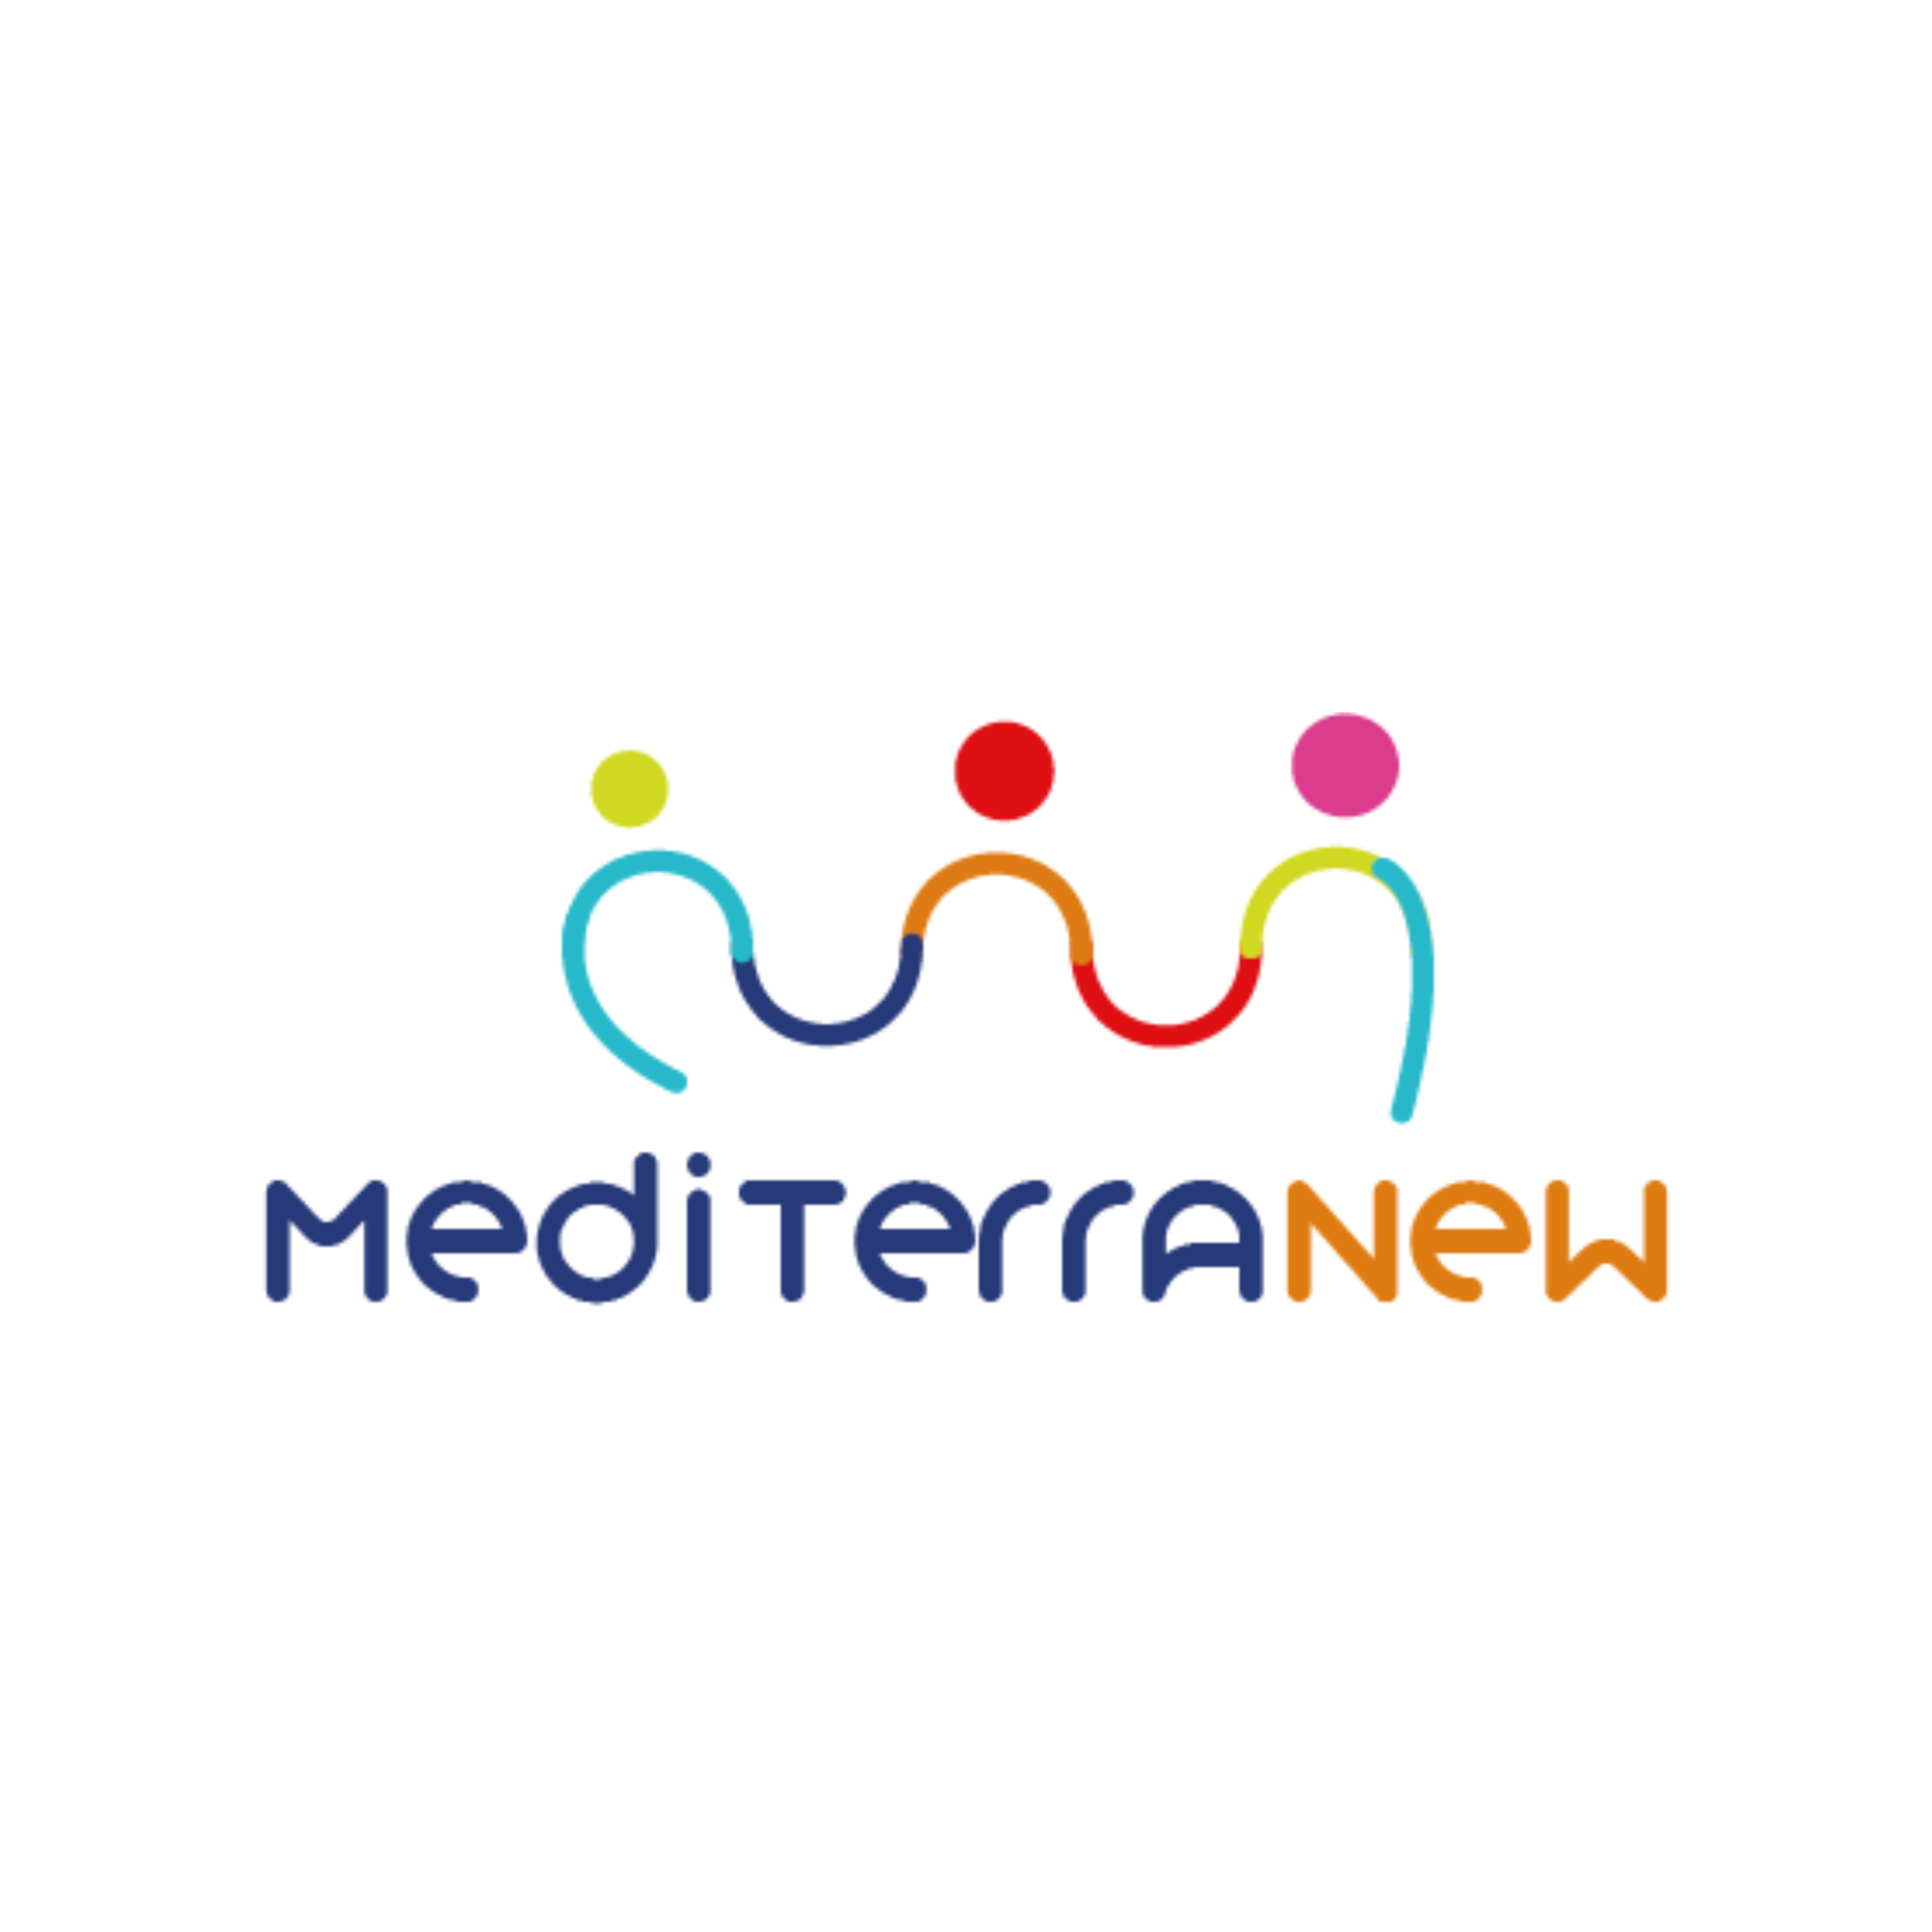 MediterraNEW